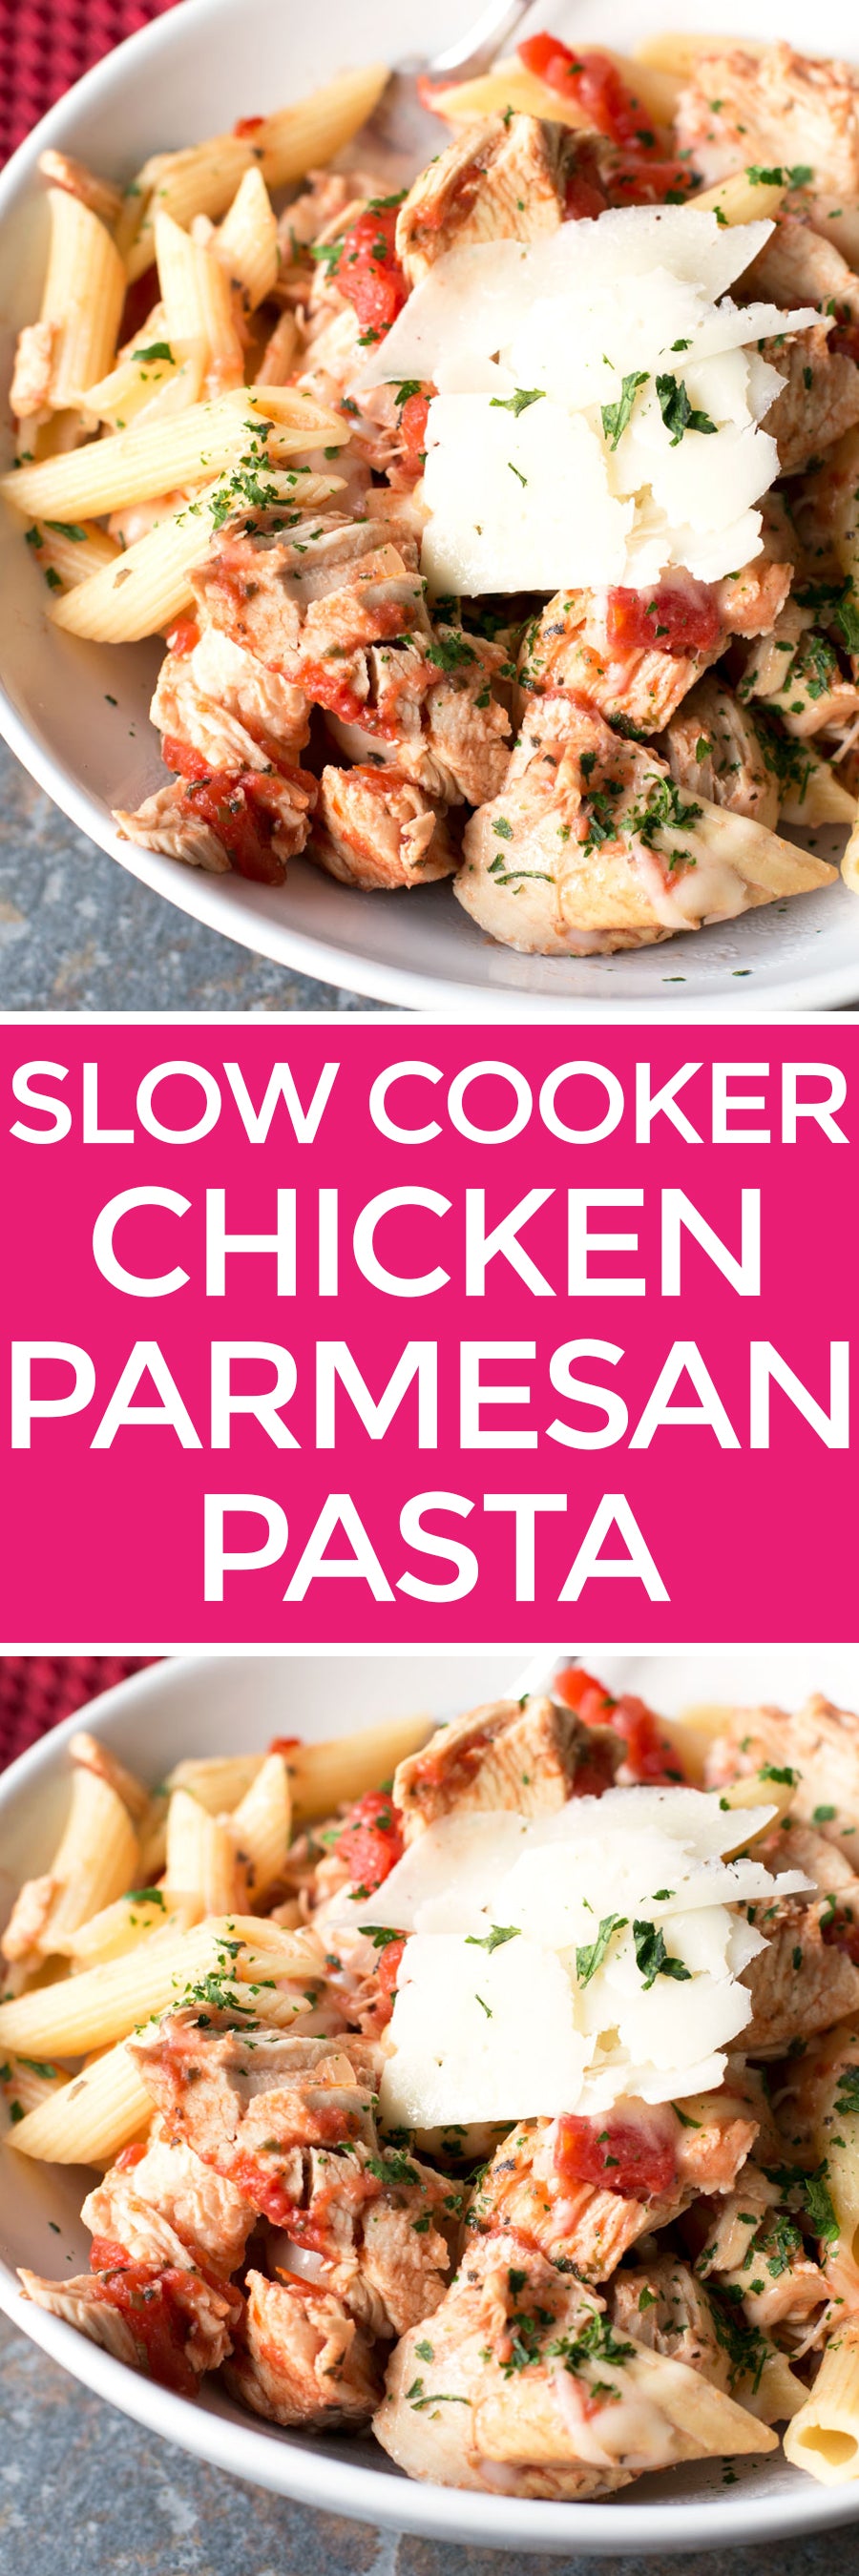 Slow Cooker Chicken Parmesan Pasta | pigofthemonth.com #pasta #Italian #crockpot #slowcooker